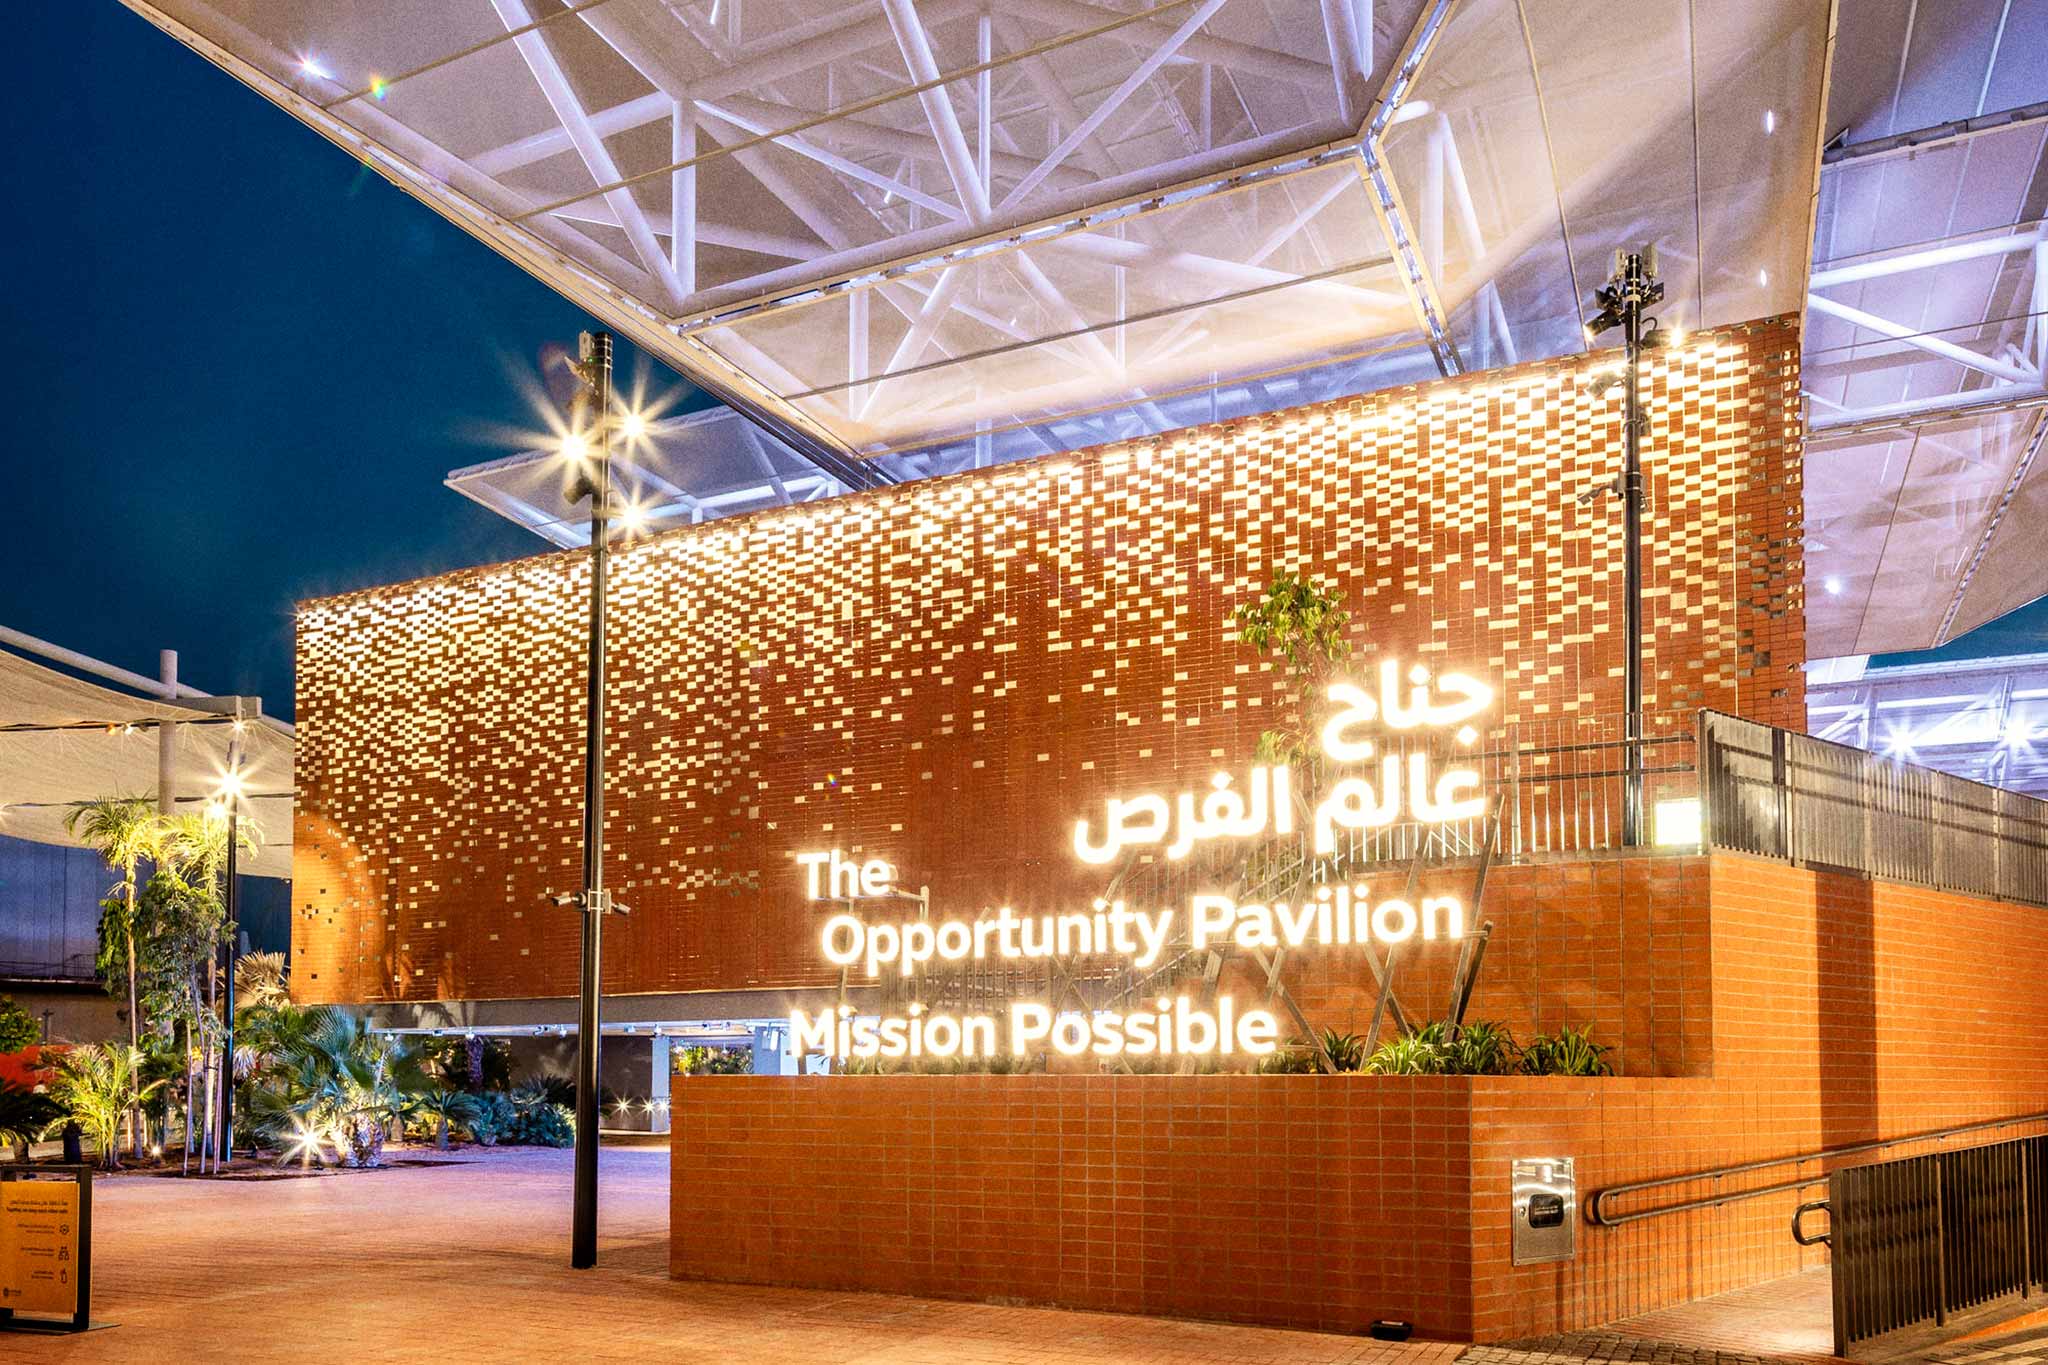 Expo 2020 Dubai, Opportunity Pavilion. Photo: Suneesh Sudhakaran/Expo 2020 Dubai